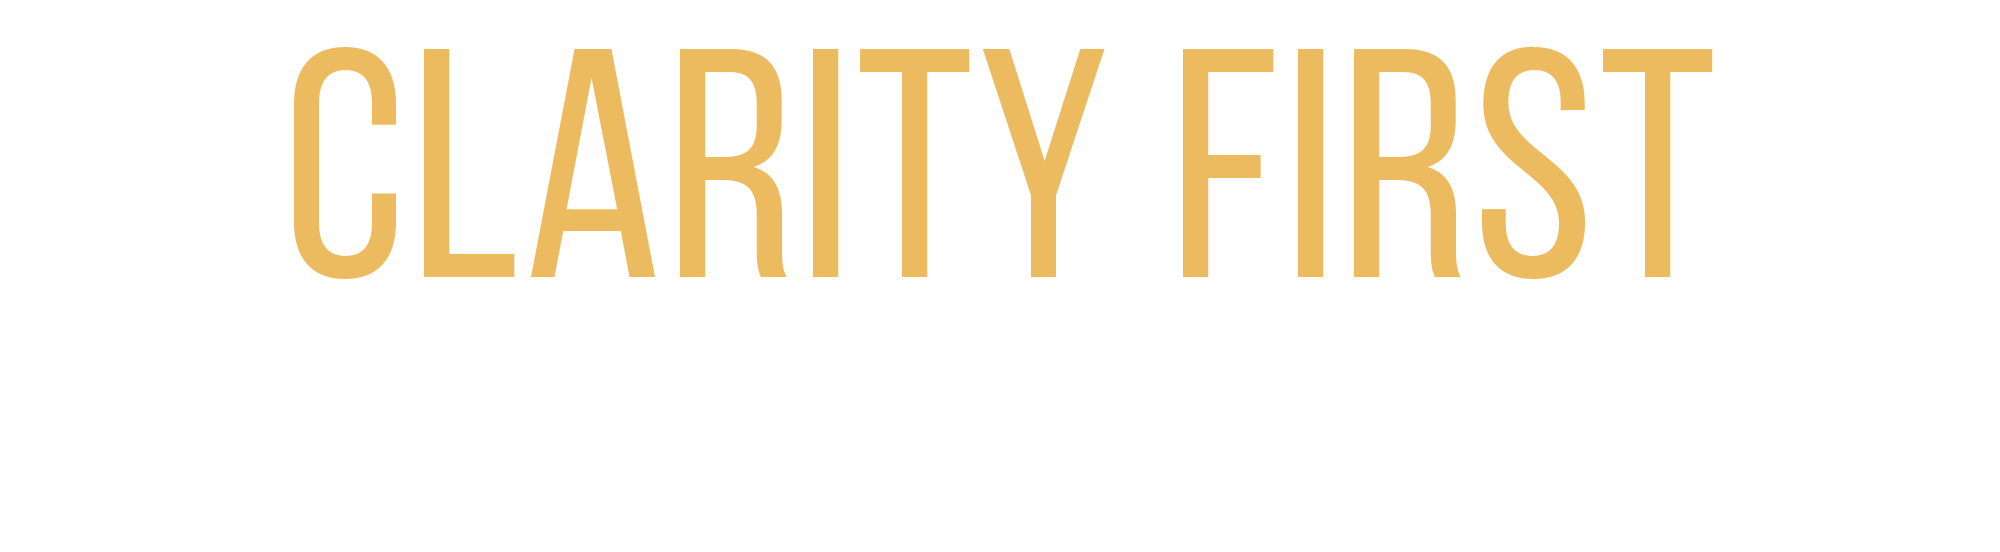 Learn | Clarity First Program